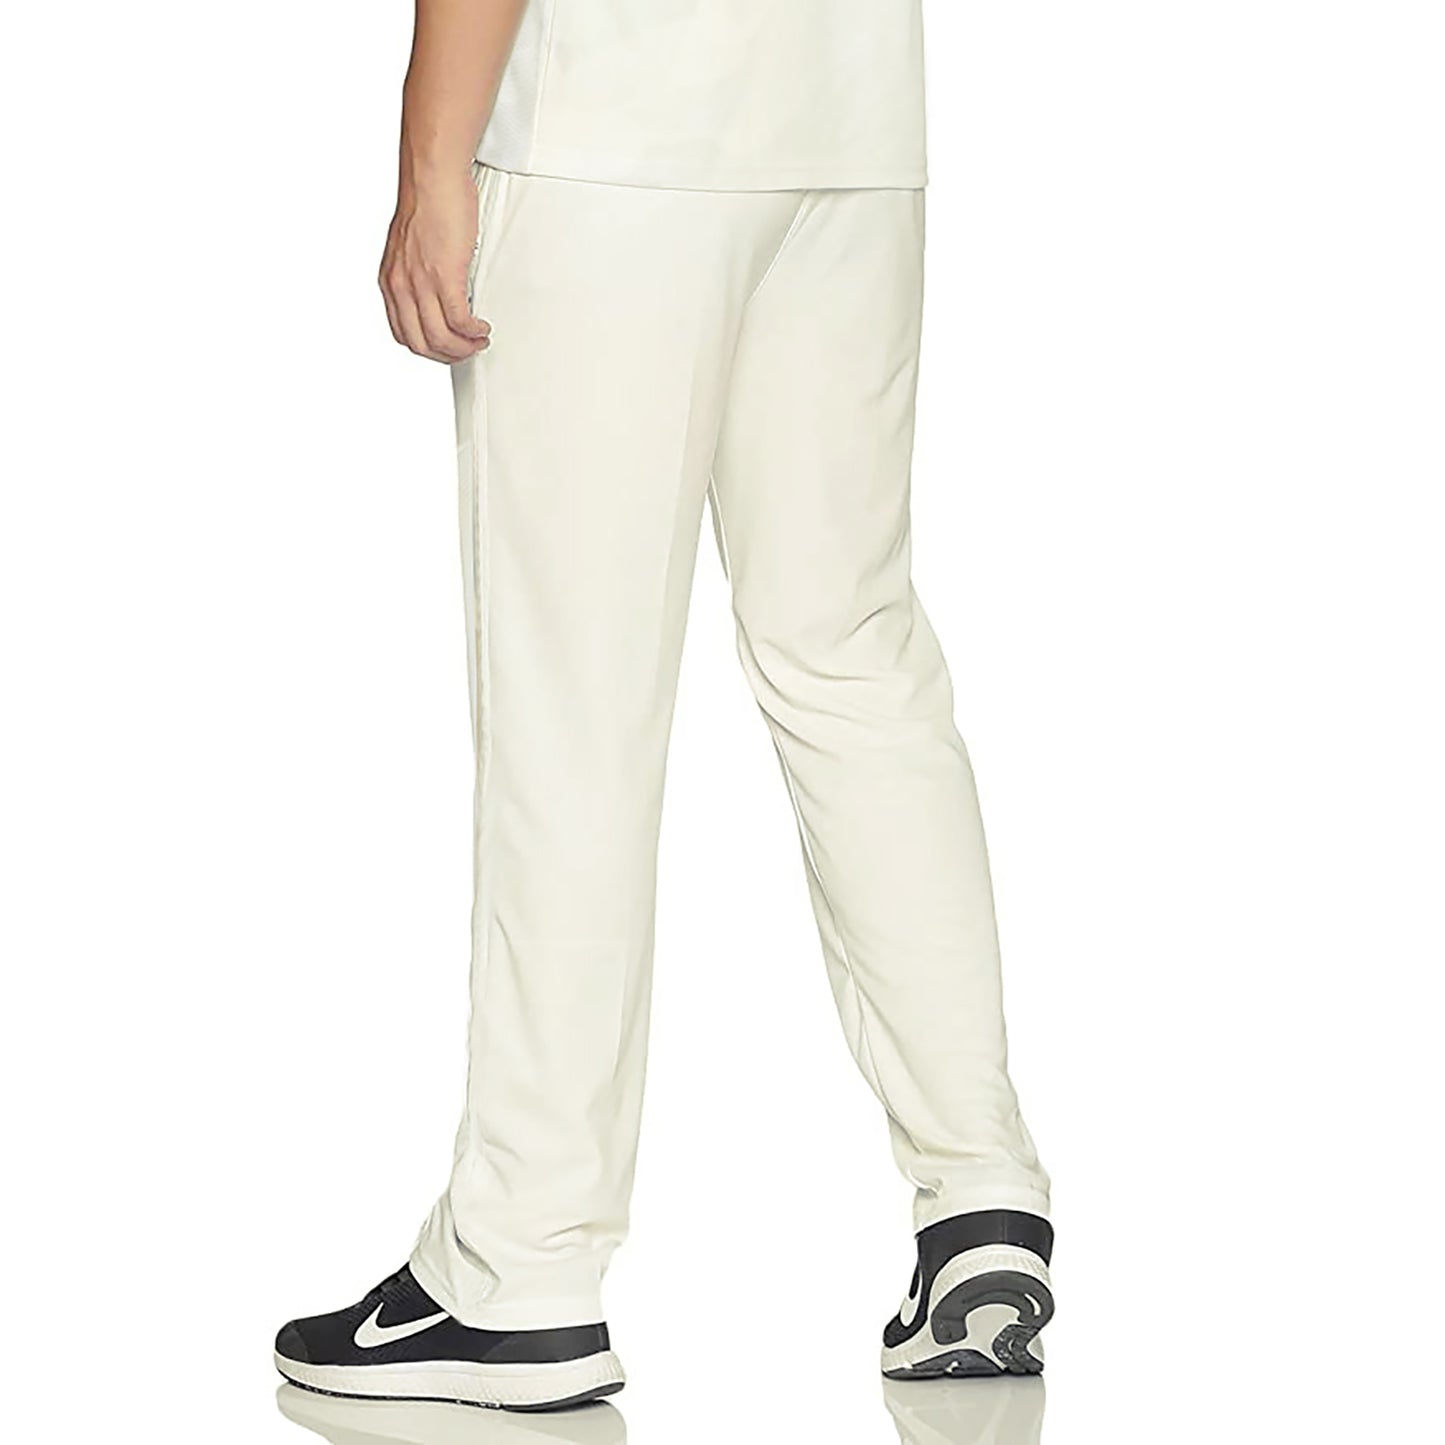 Prokick Club Cricket Trouser, Off White - Best Price online Prokicksports.com